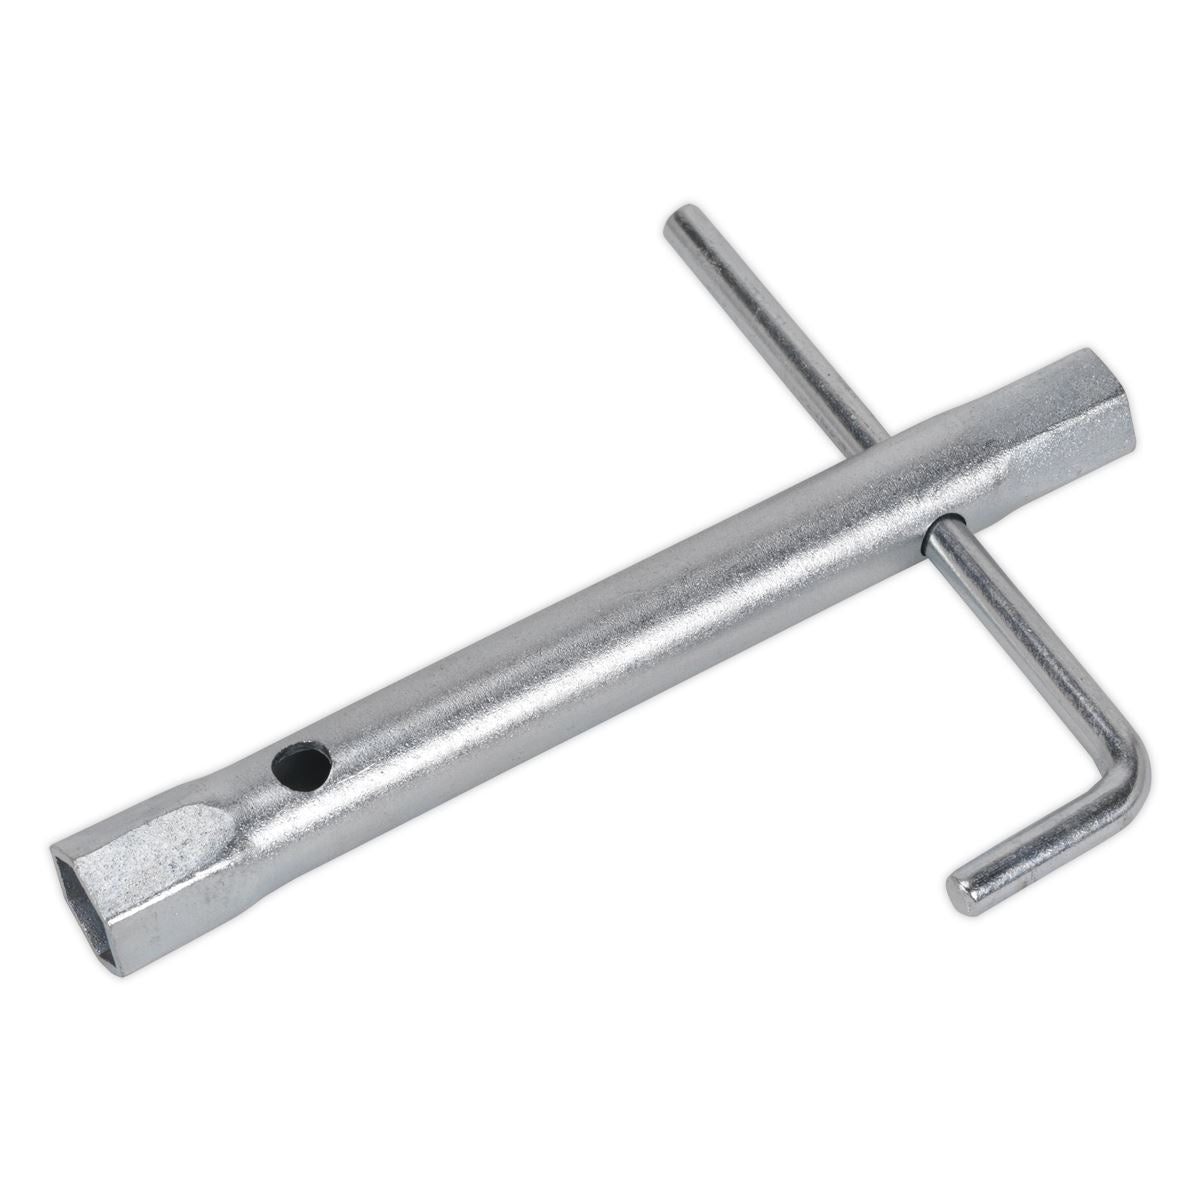 Sealey Double End Long Reach Spark Plug Box Spanner 14/16mm with L-Bar